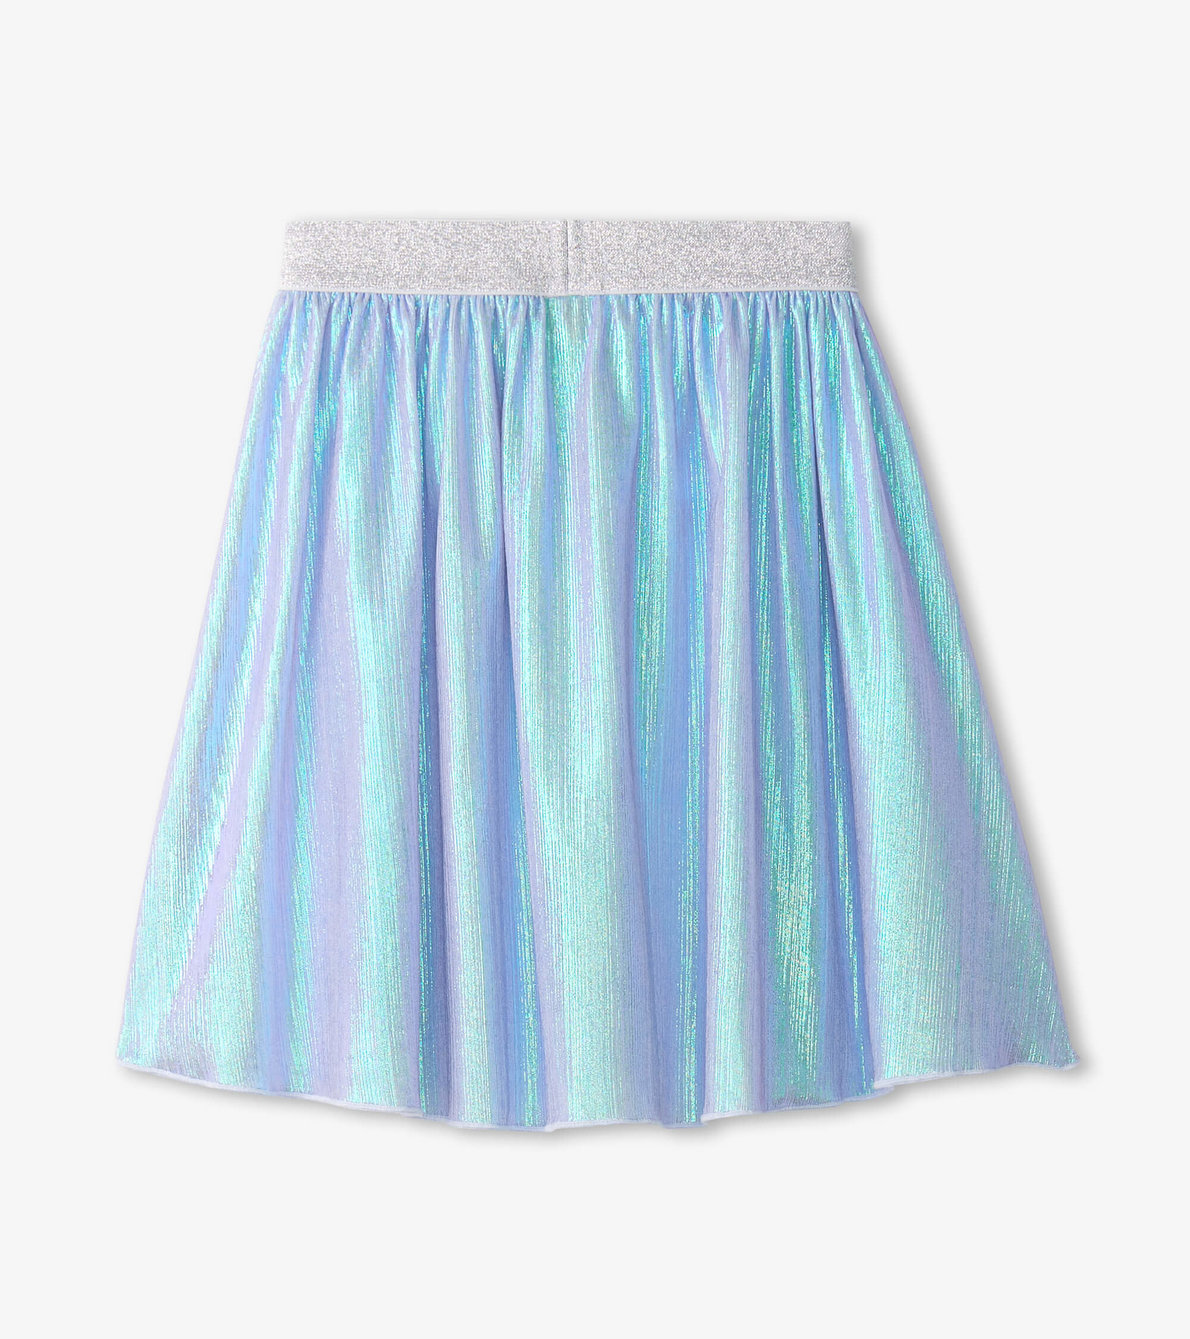 View larger image of Girls Silver Metallic Mid Length Skirt